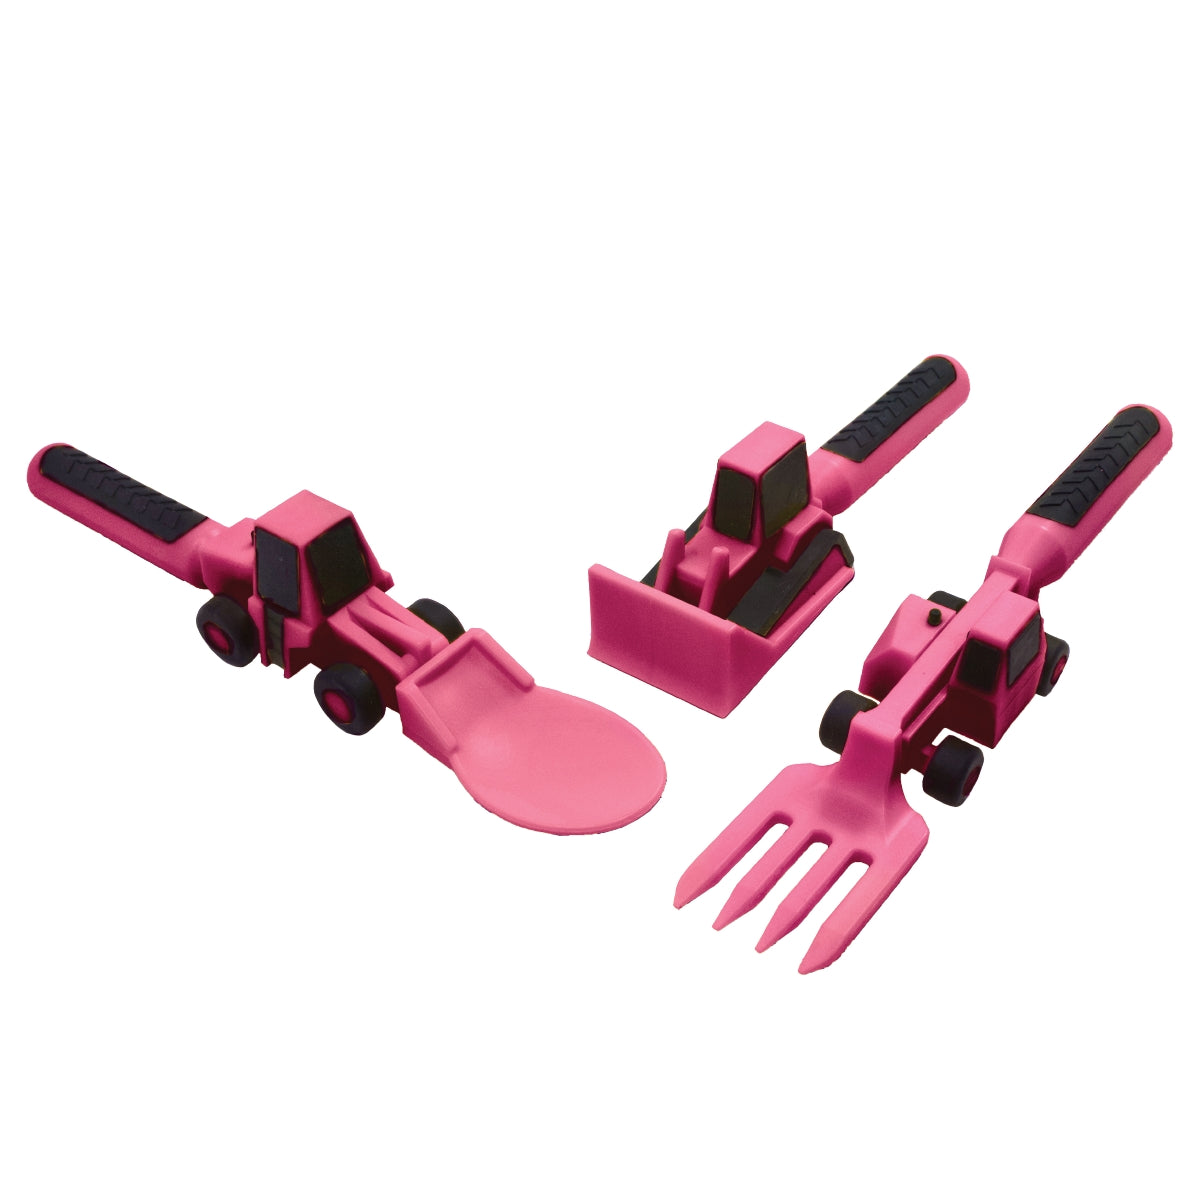 Constructive Eating utensils set